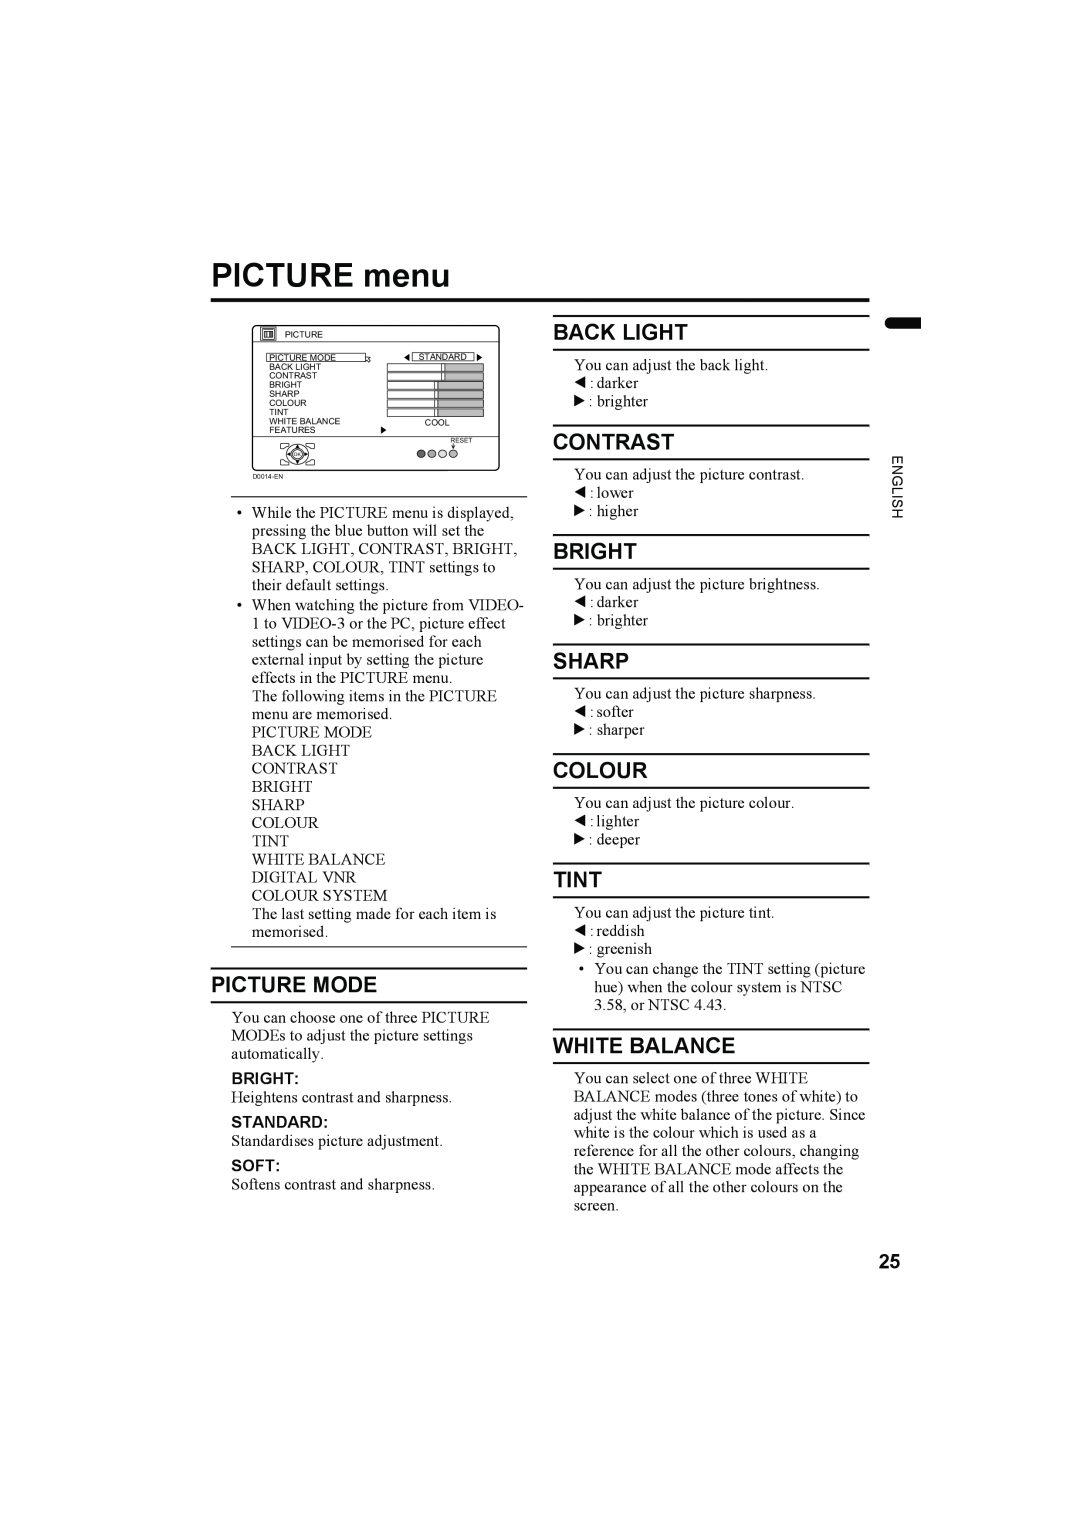 JVC LT-Z32SX4B PICTURE menu, Back Light, Contrast, Picture Mode, Bright, Sharp, Colour, Tint, White Balance, Standard 